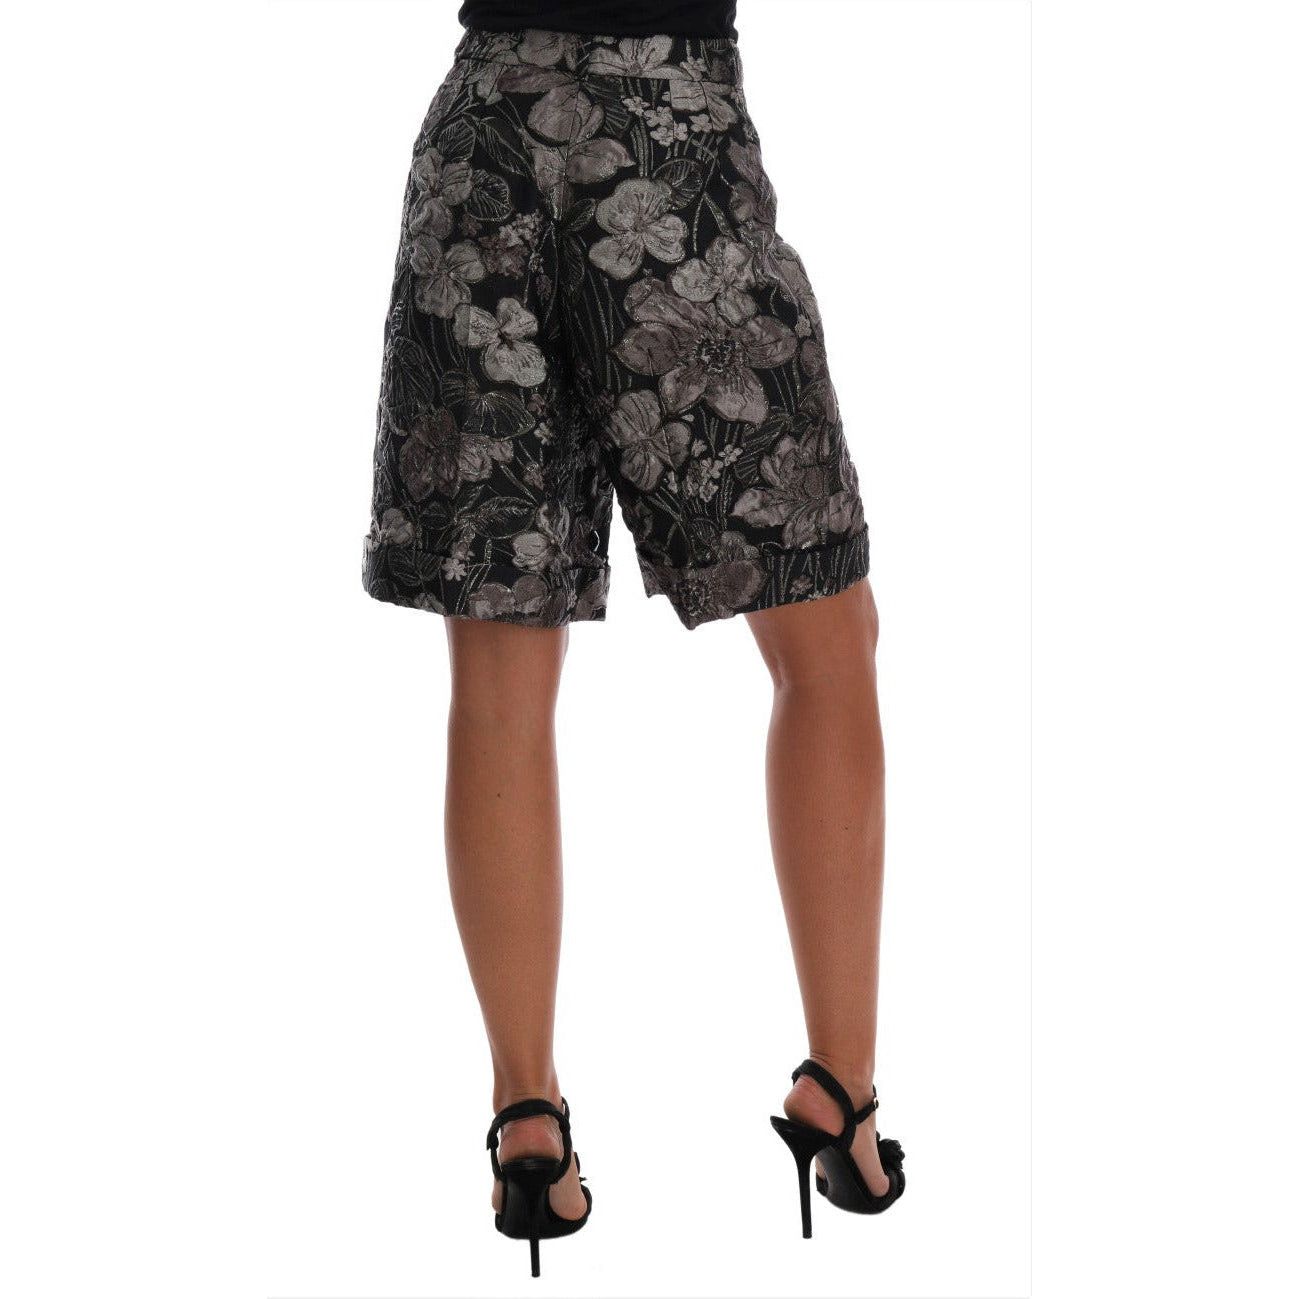 Dolce & Gabbana Elegant High-Waist Brocade Shorts gray-floral-brocade-high-waist-shorts Shorts 466984-gray-floral-brocade-high-waist-shorts-3.jpg